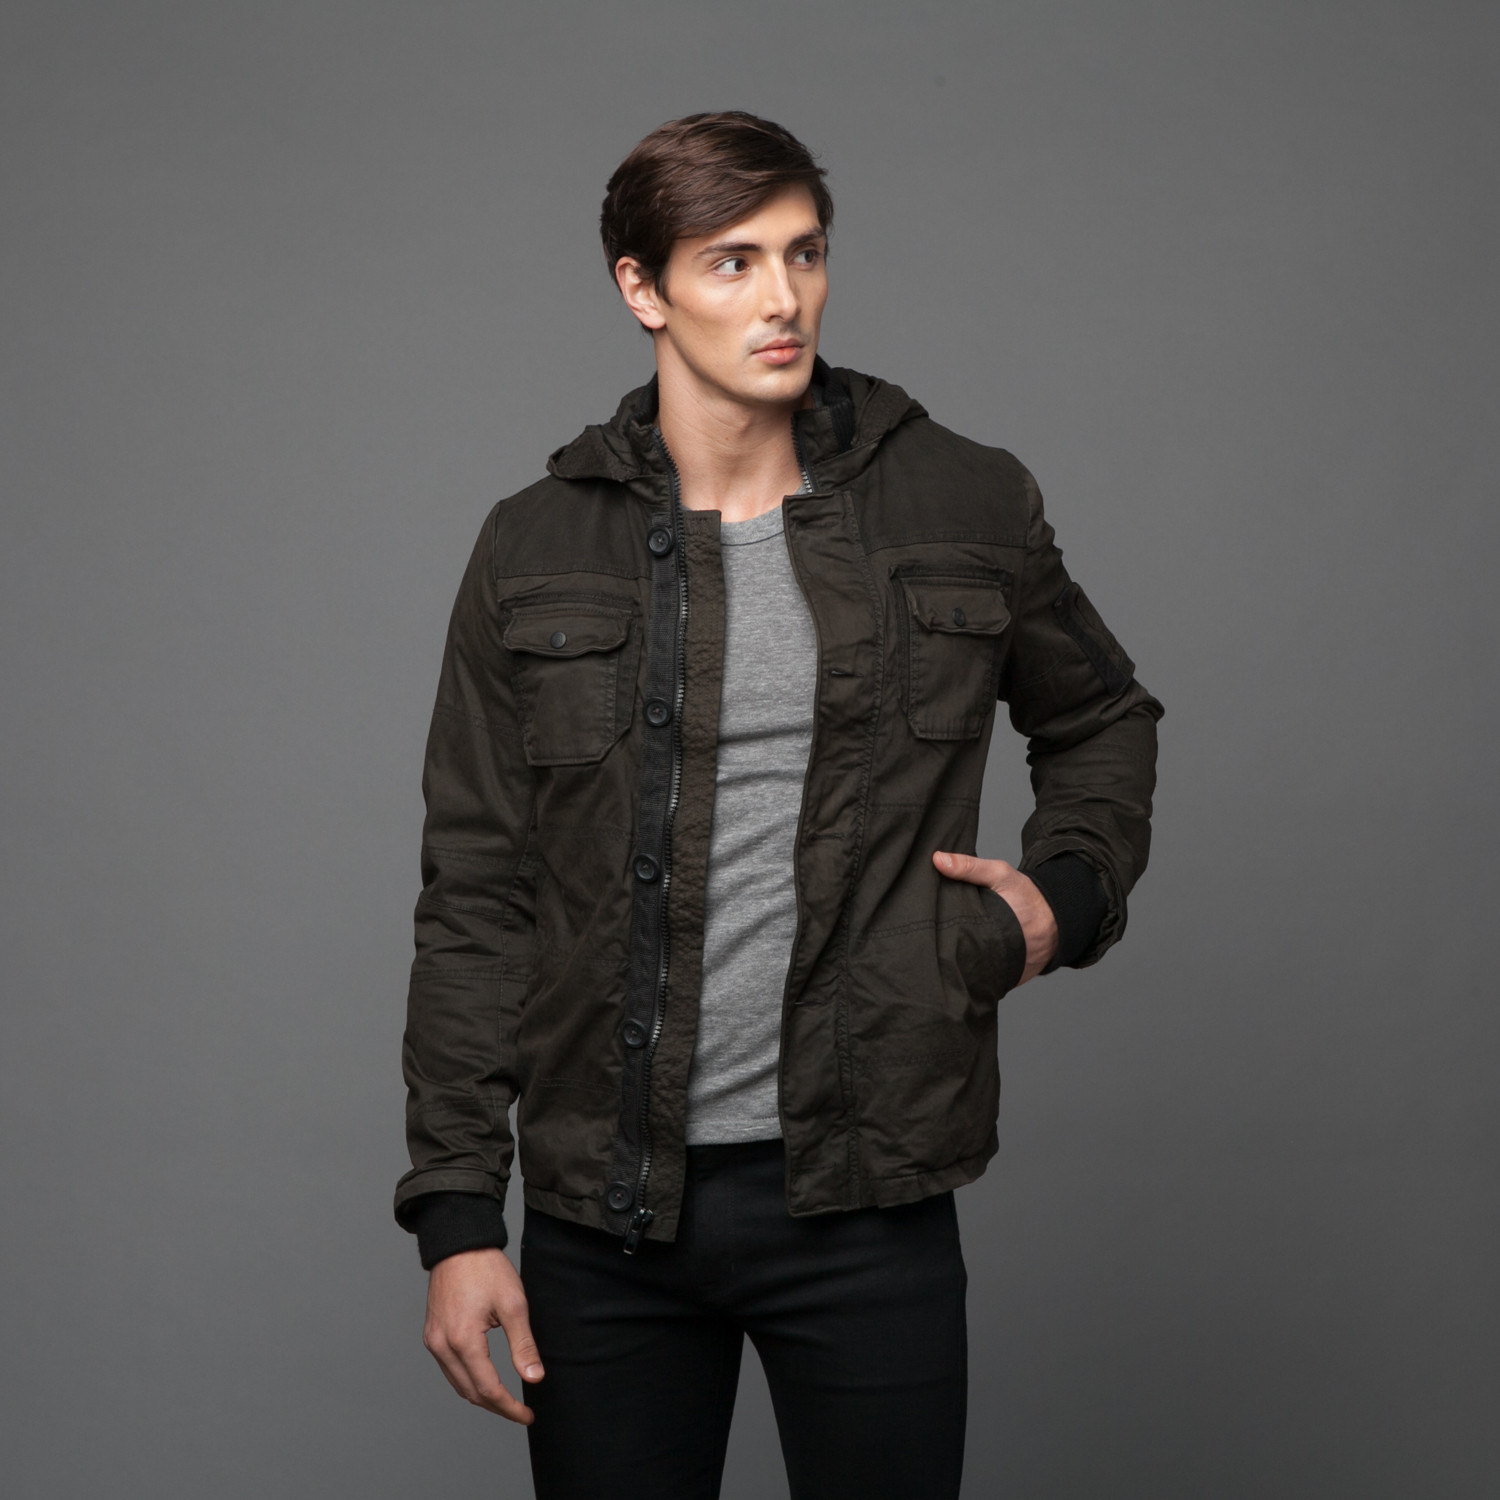 Rogue // Military Jacket // Olive (S) - Final Fall Fashion Picks ...